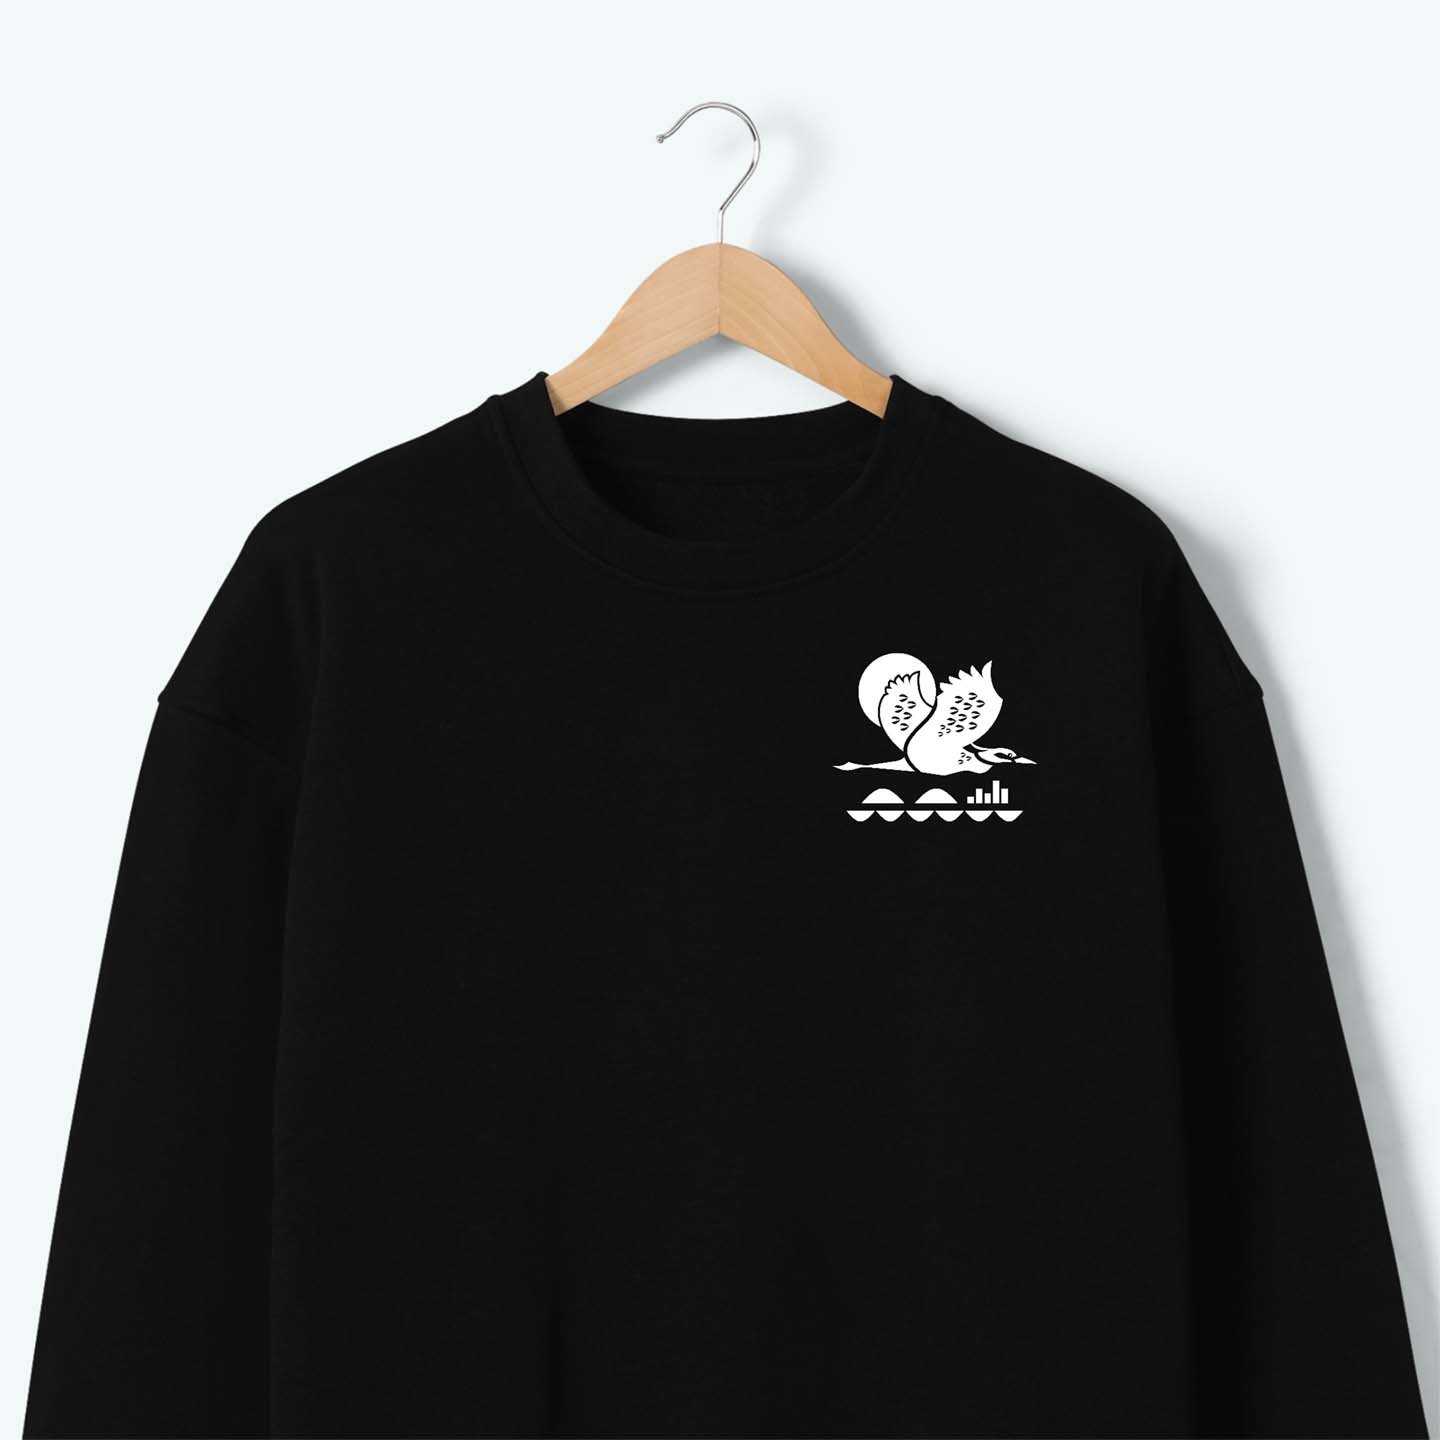 black-sweatshirt-with-environmental-logo-in-white.jpg